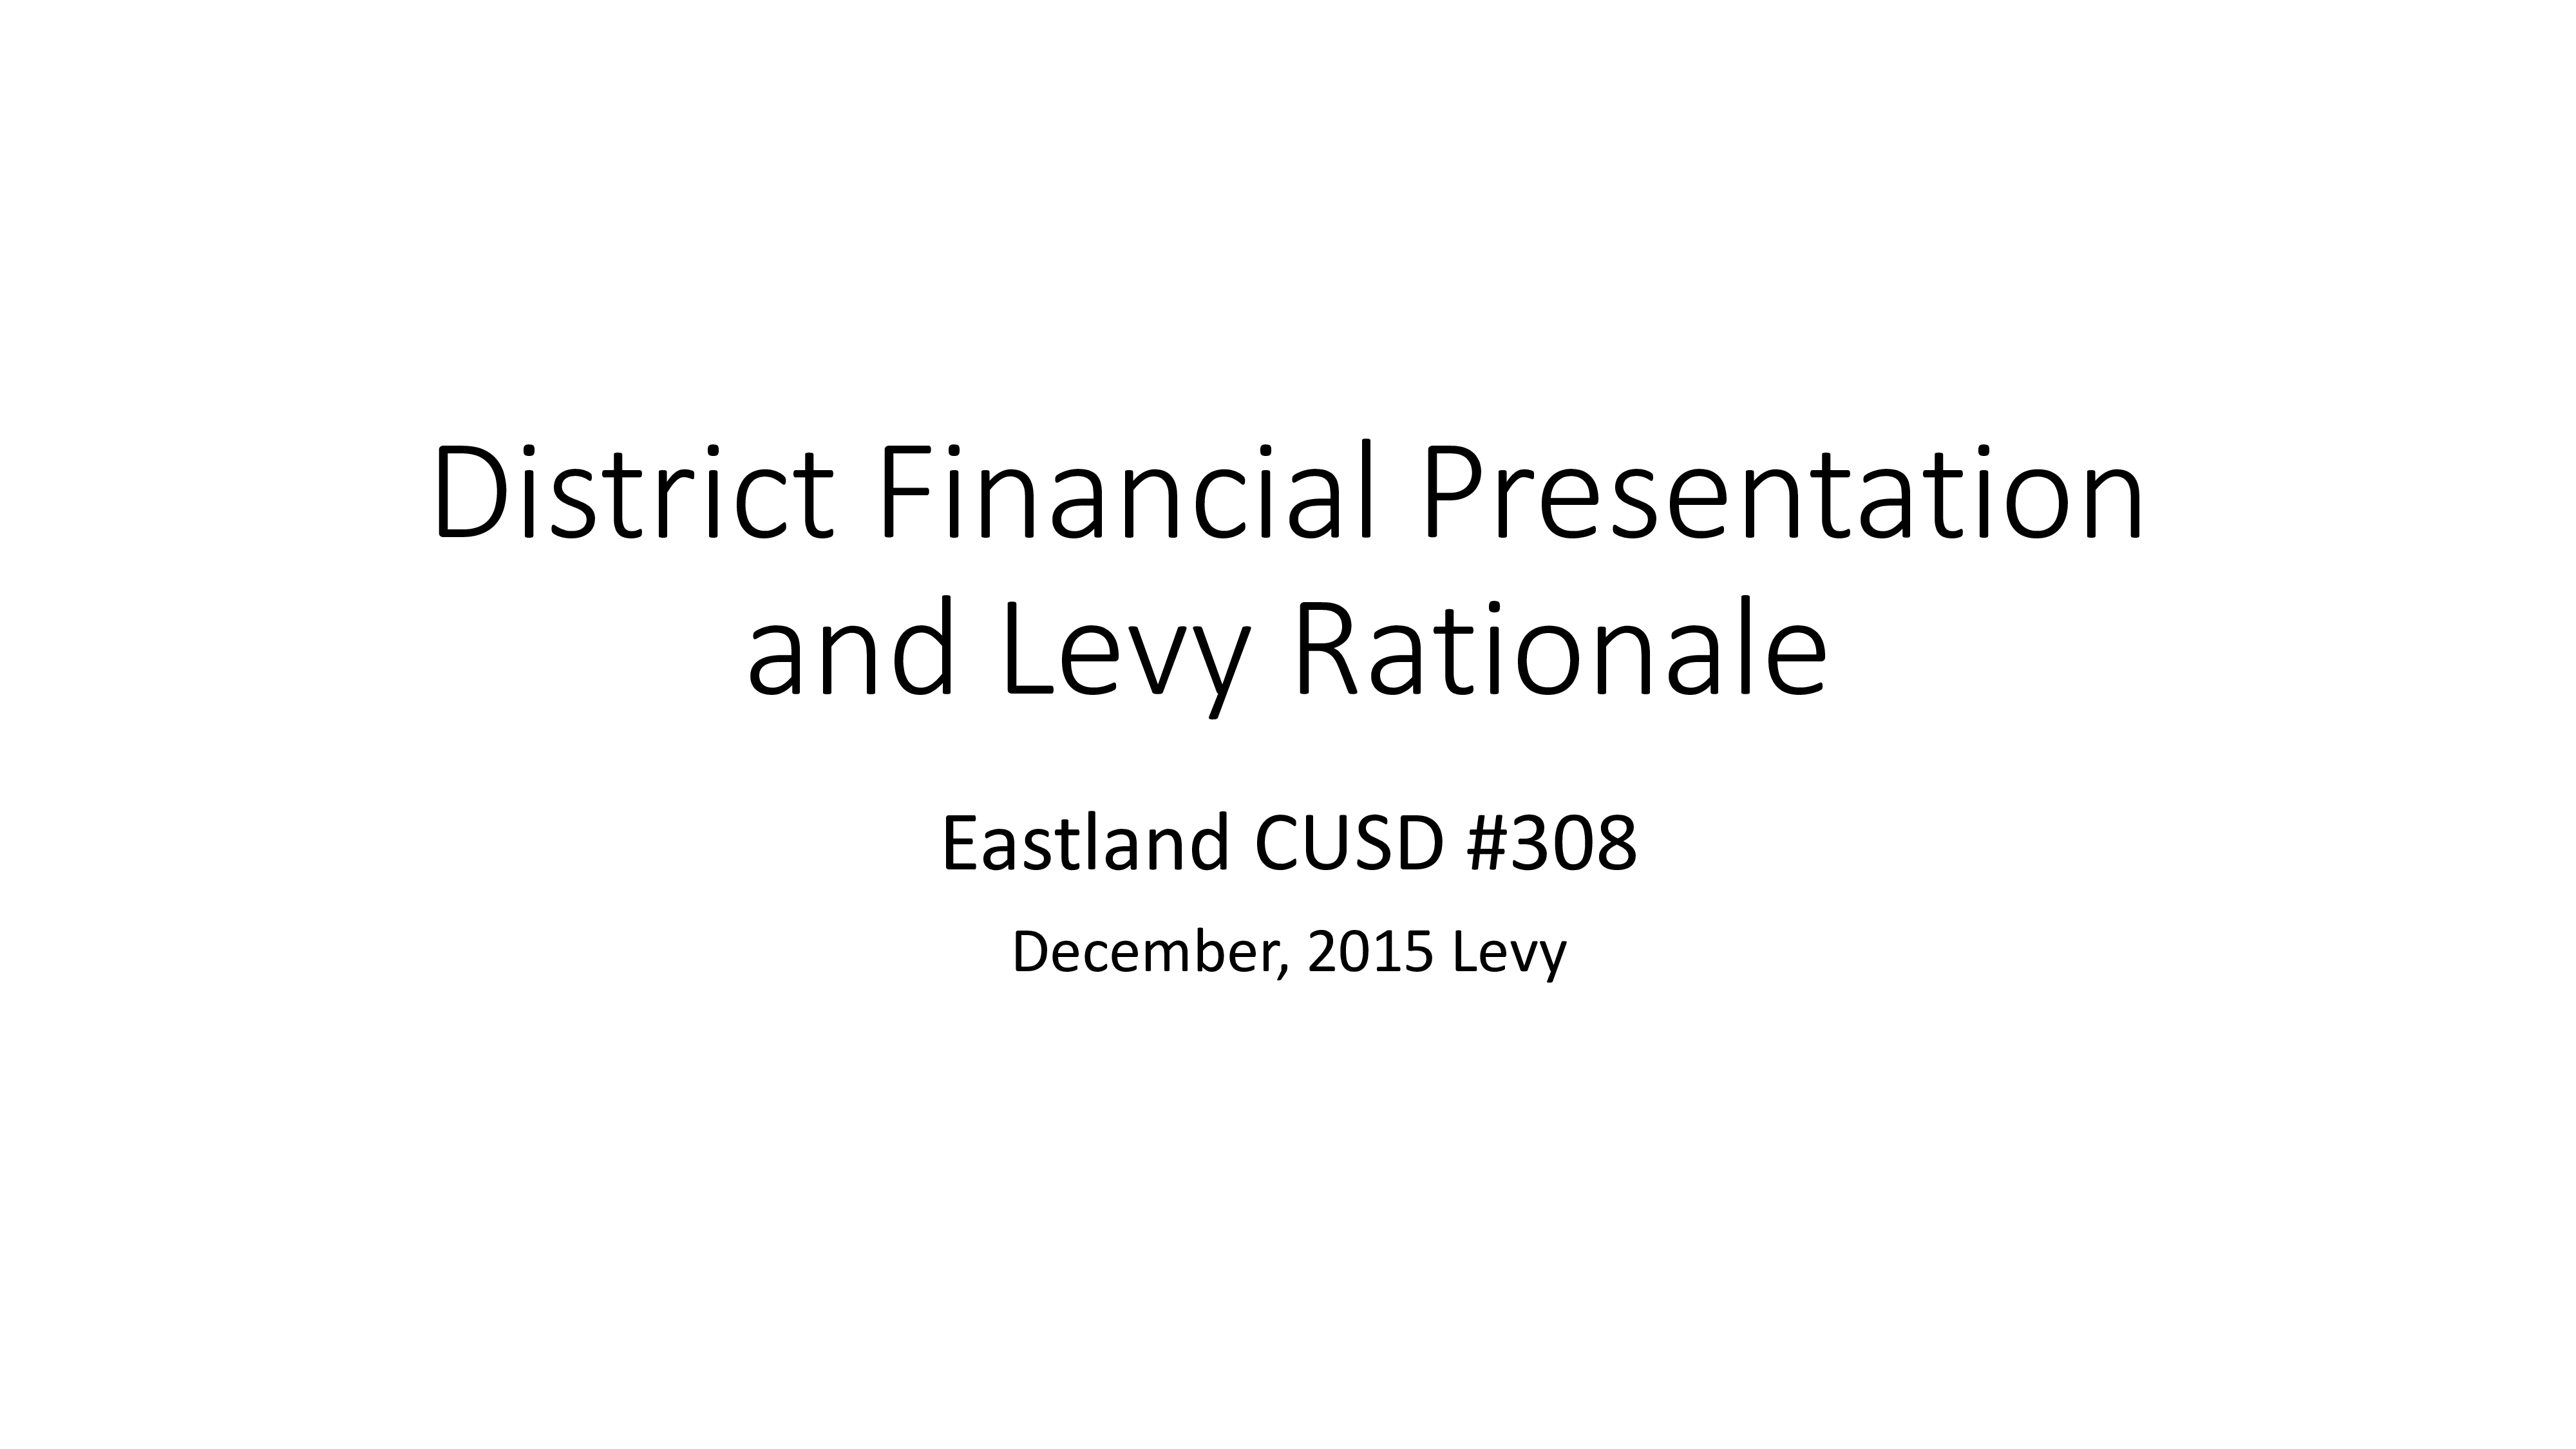 District Financial Presentation main image